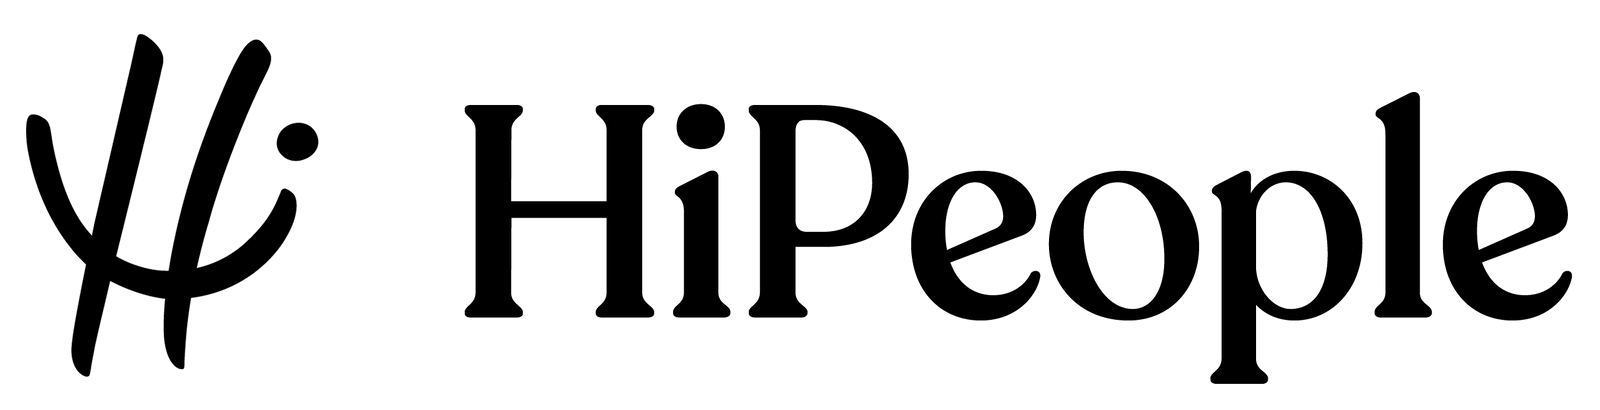 HiPeople Logo